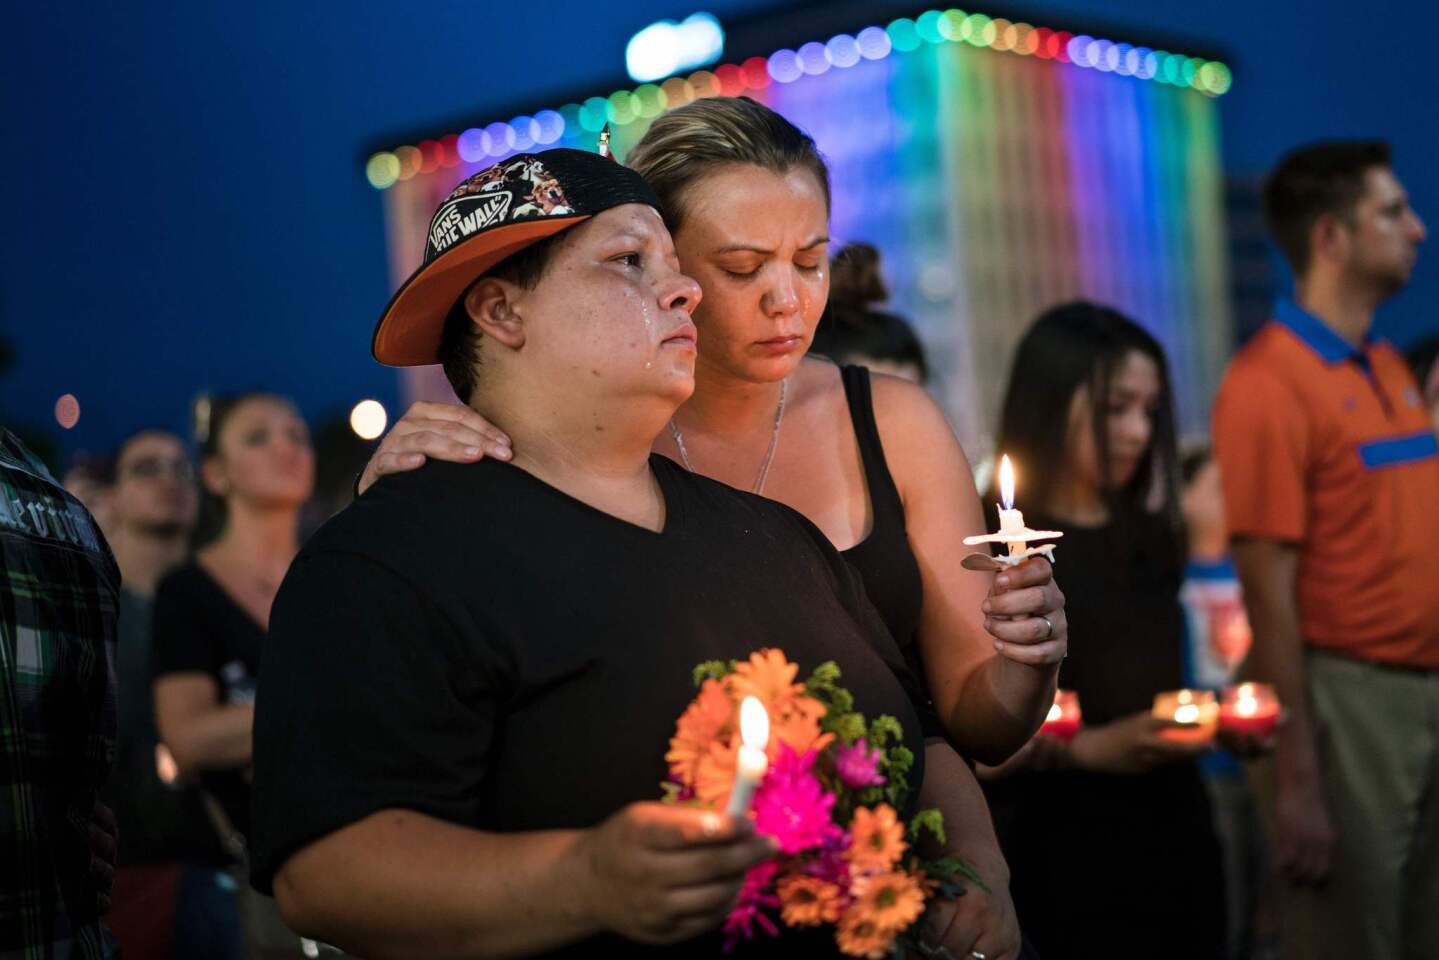 Orlando victims remembered